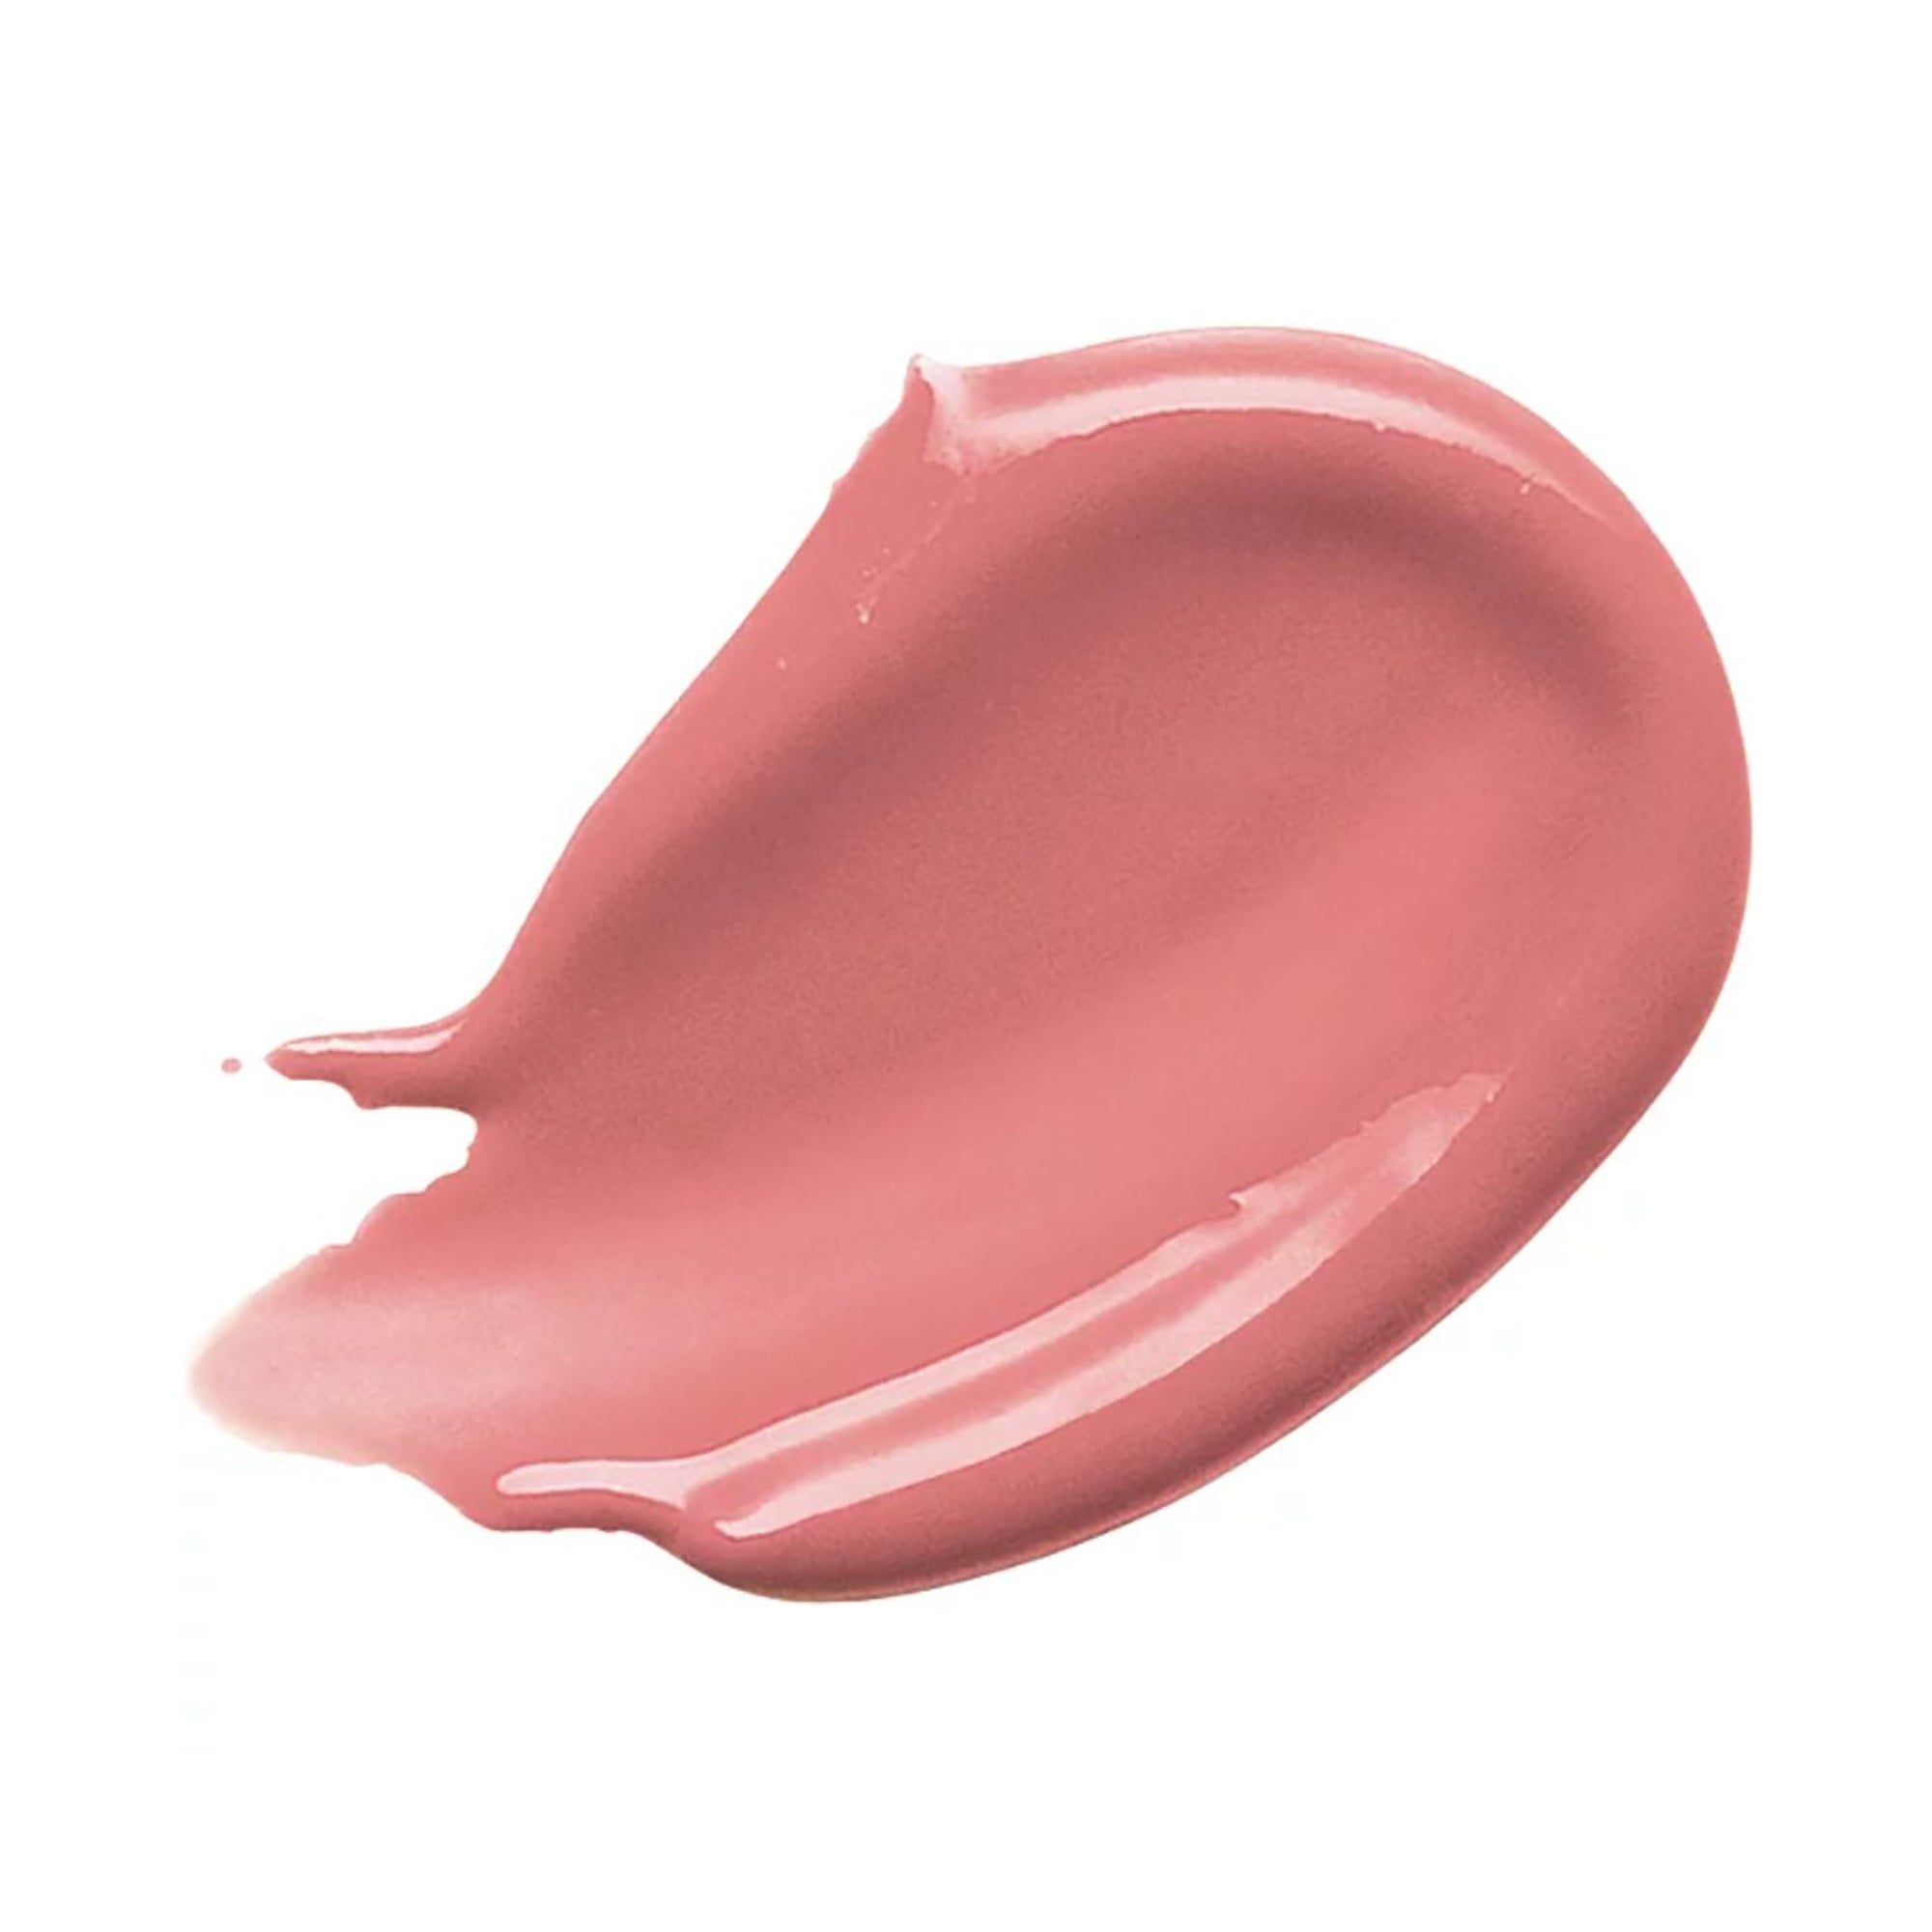 Buxom Full-on Plumping Lip Cream Gloss / MUDSLIDE / Swatch